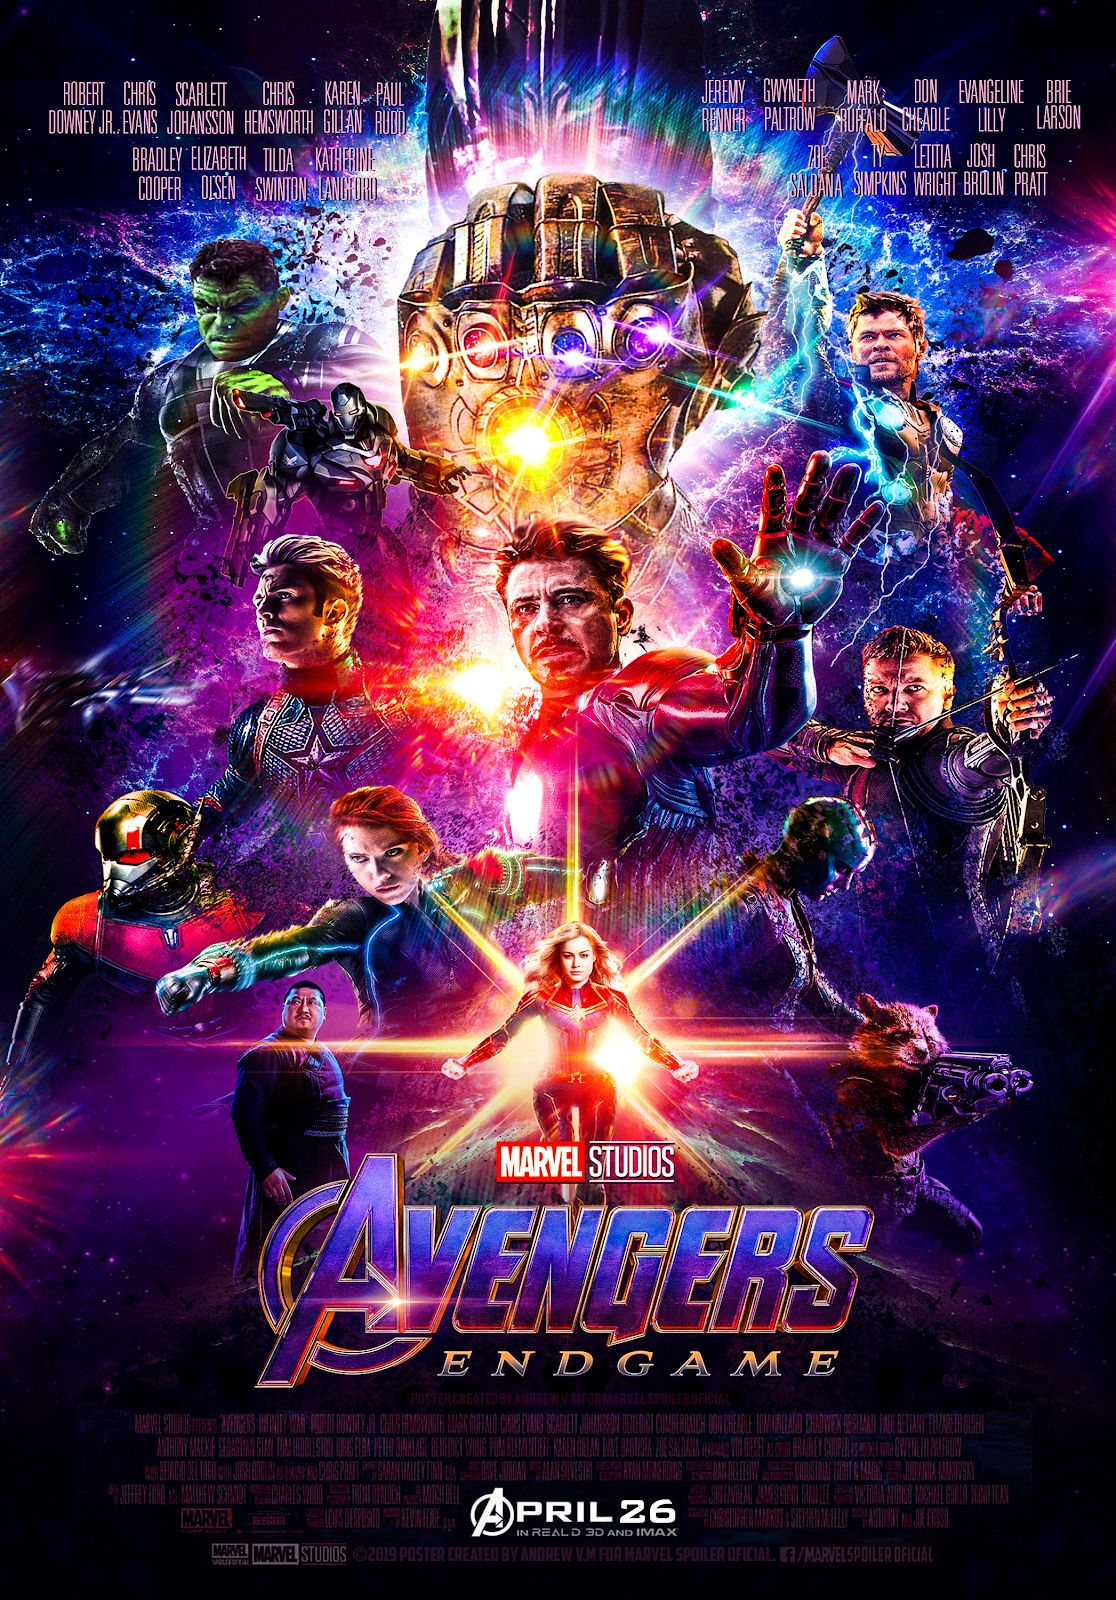 Marvel lanza nuevo tráiler y póster de "Avengers: Endgame"